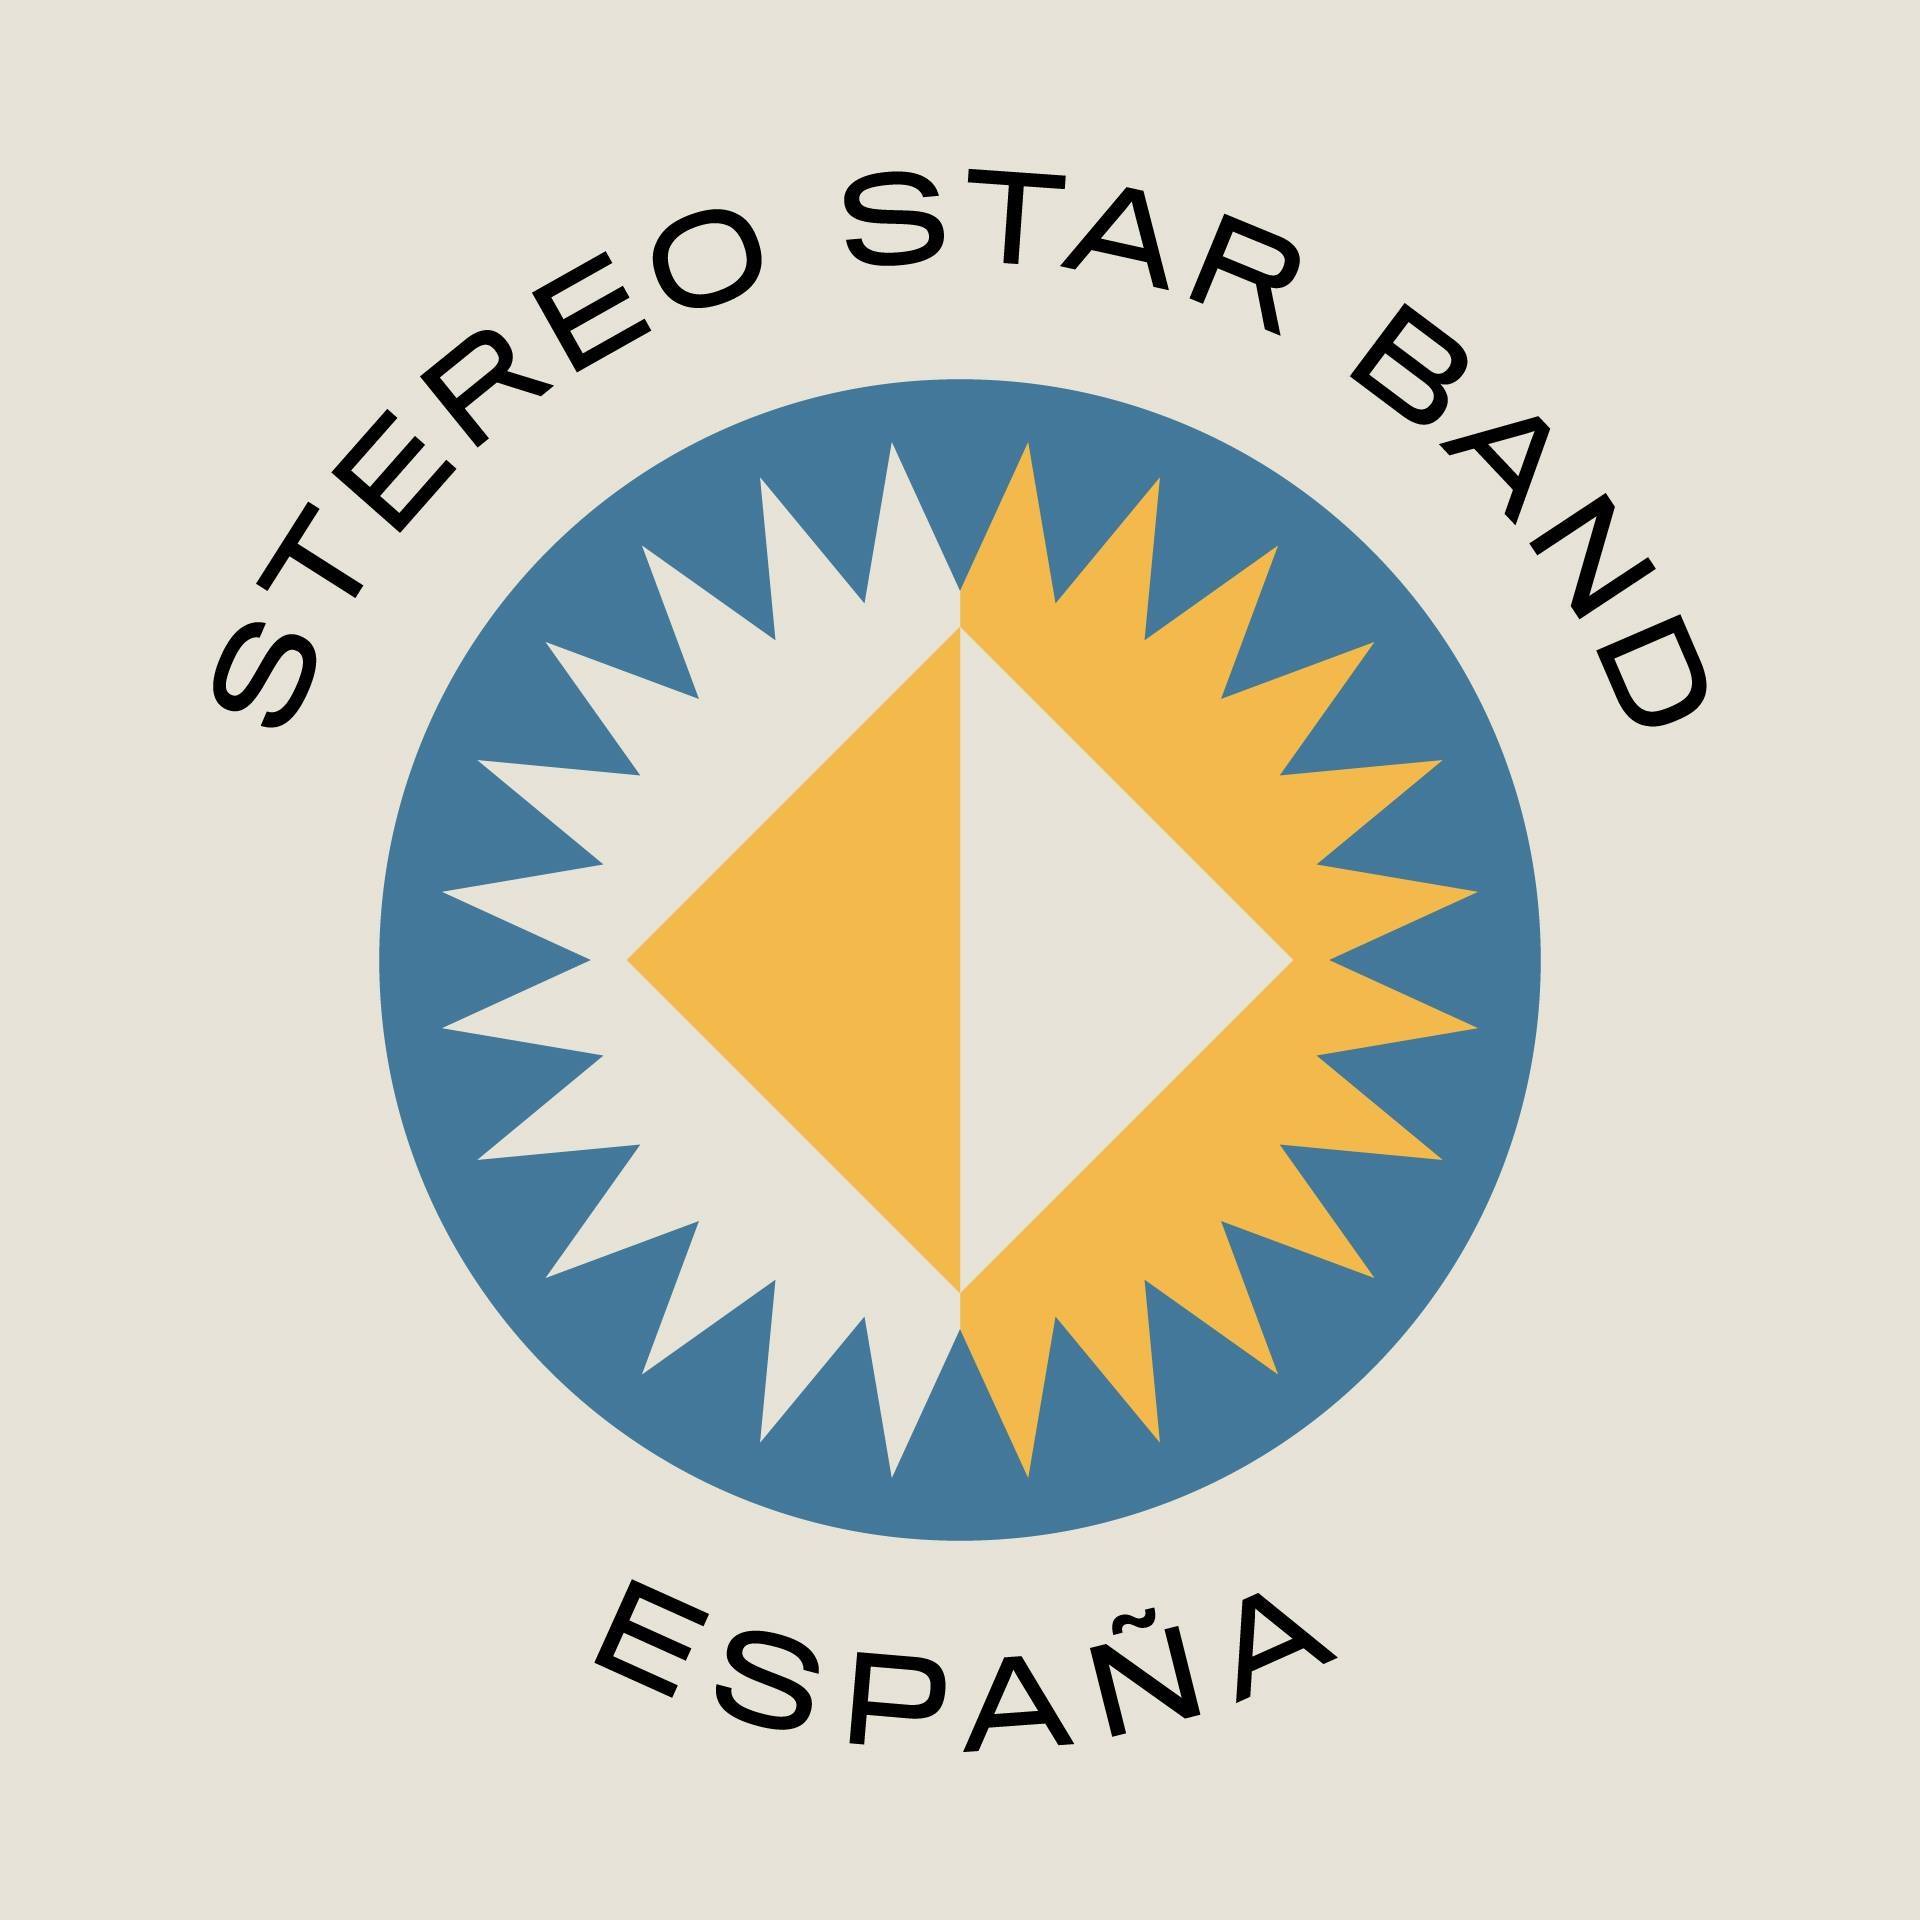 Stereo Star Band